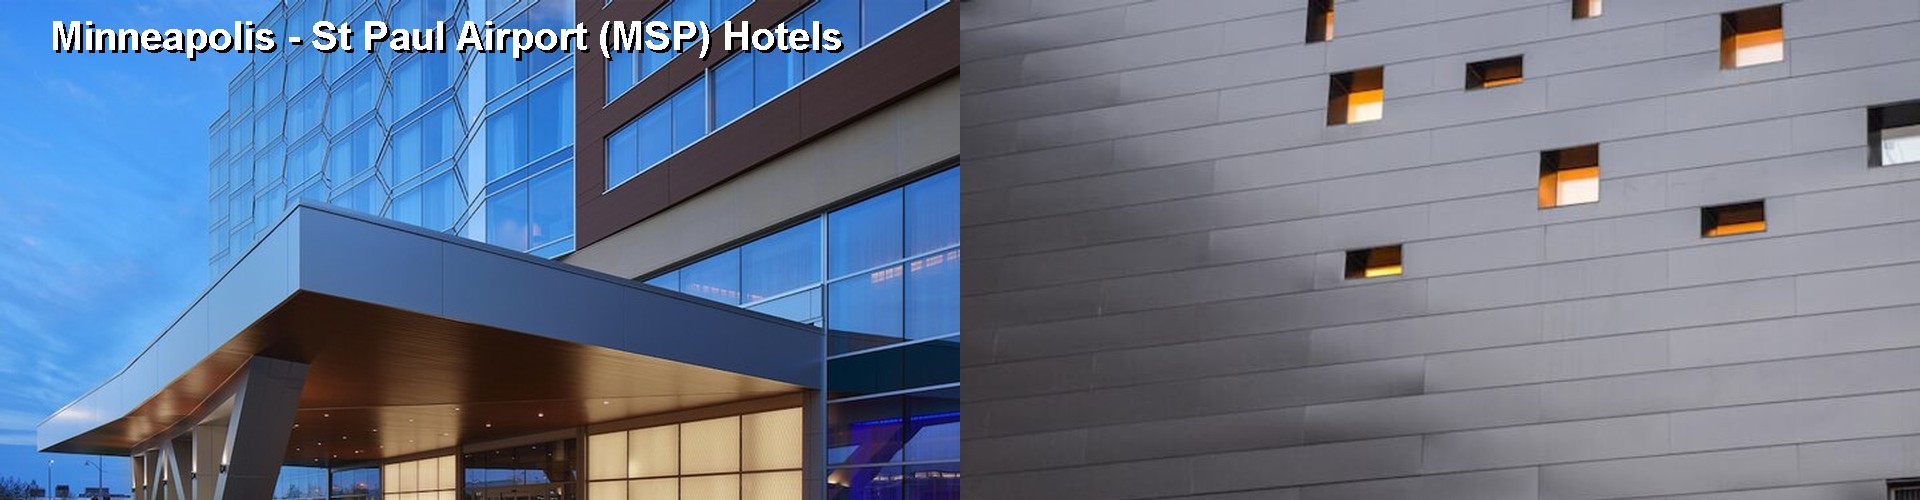 5 Best Hotels near Minneapolis - St Paul Airport (MSP)